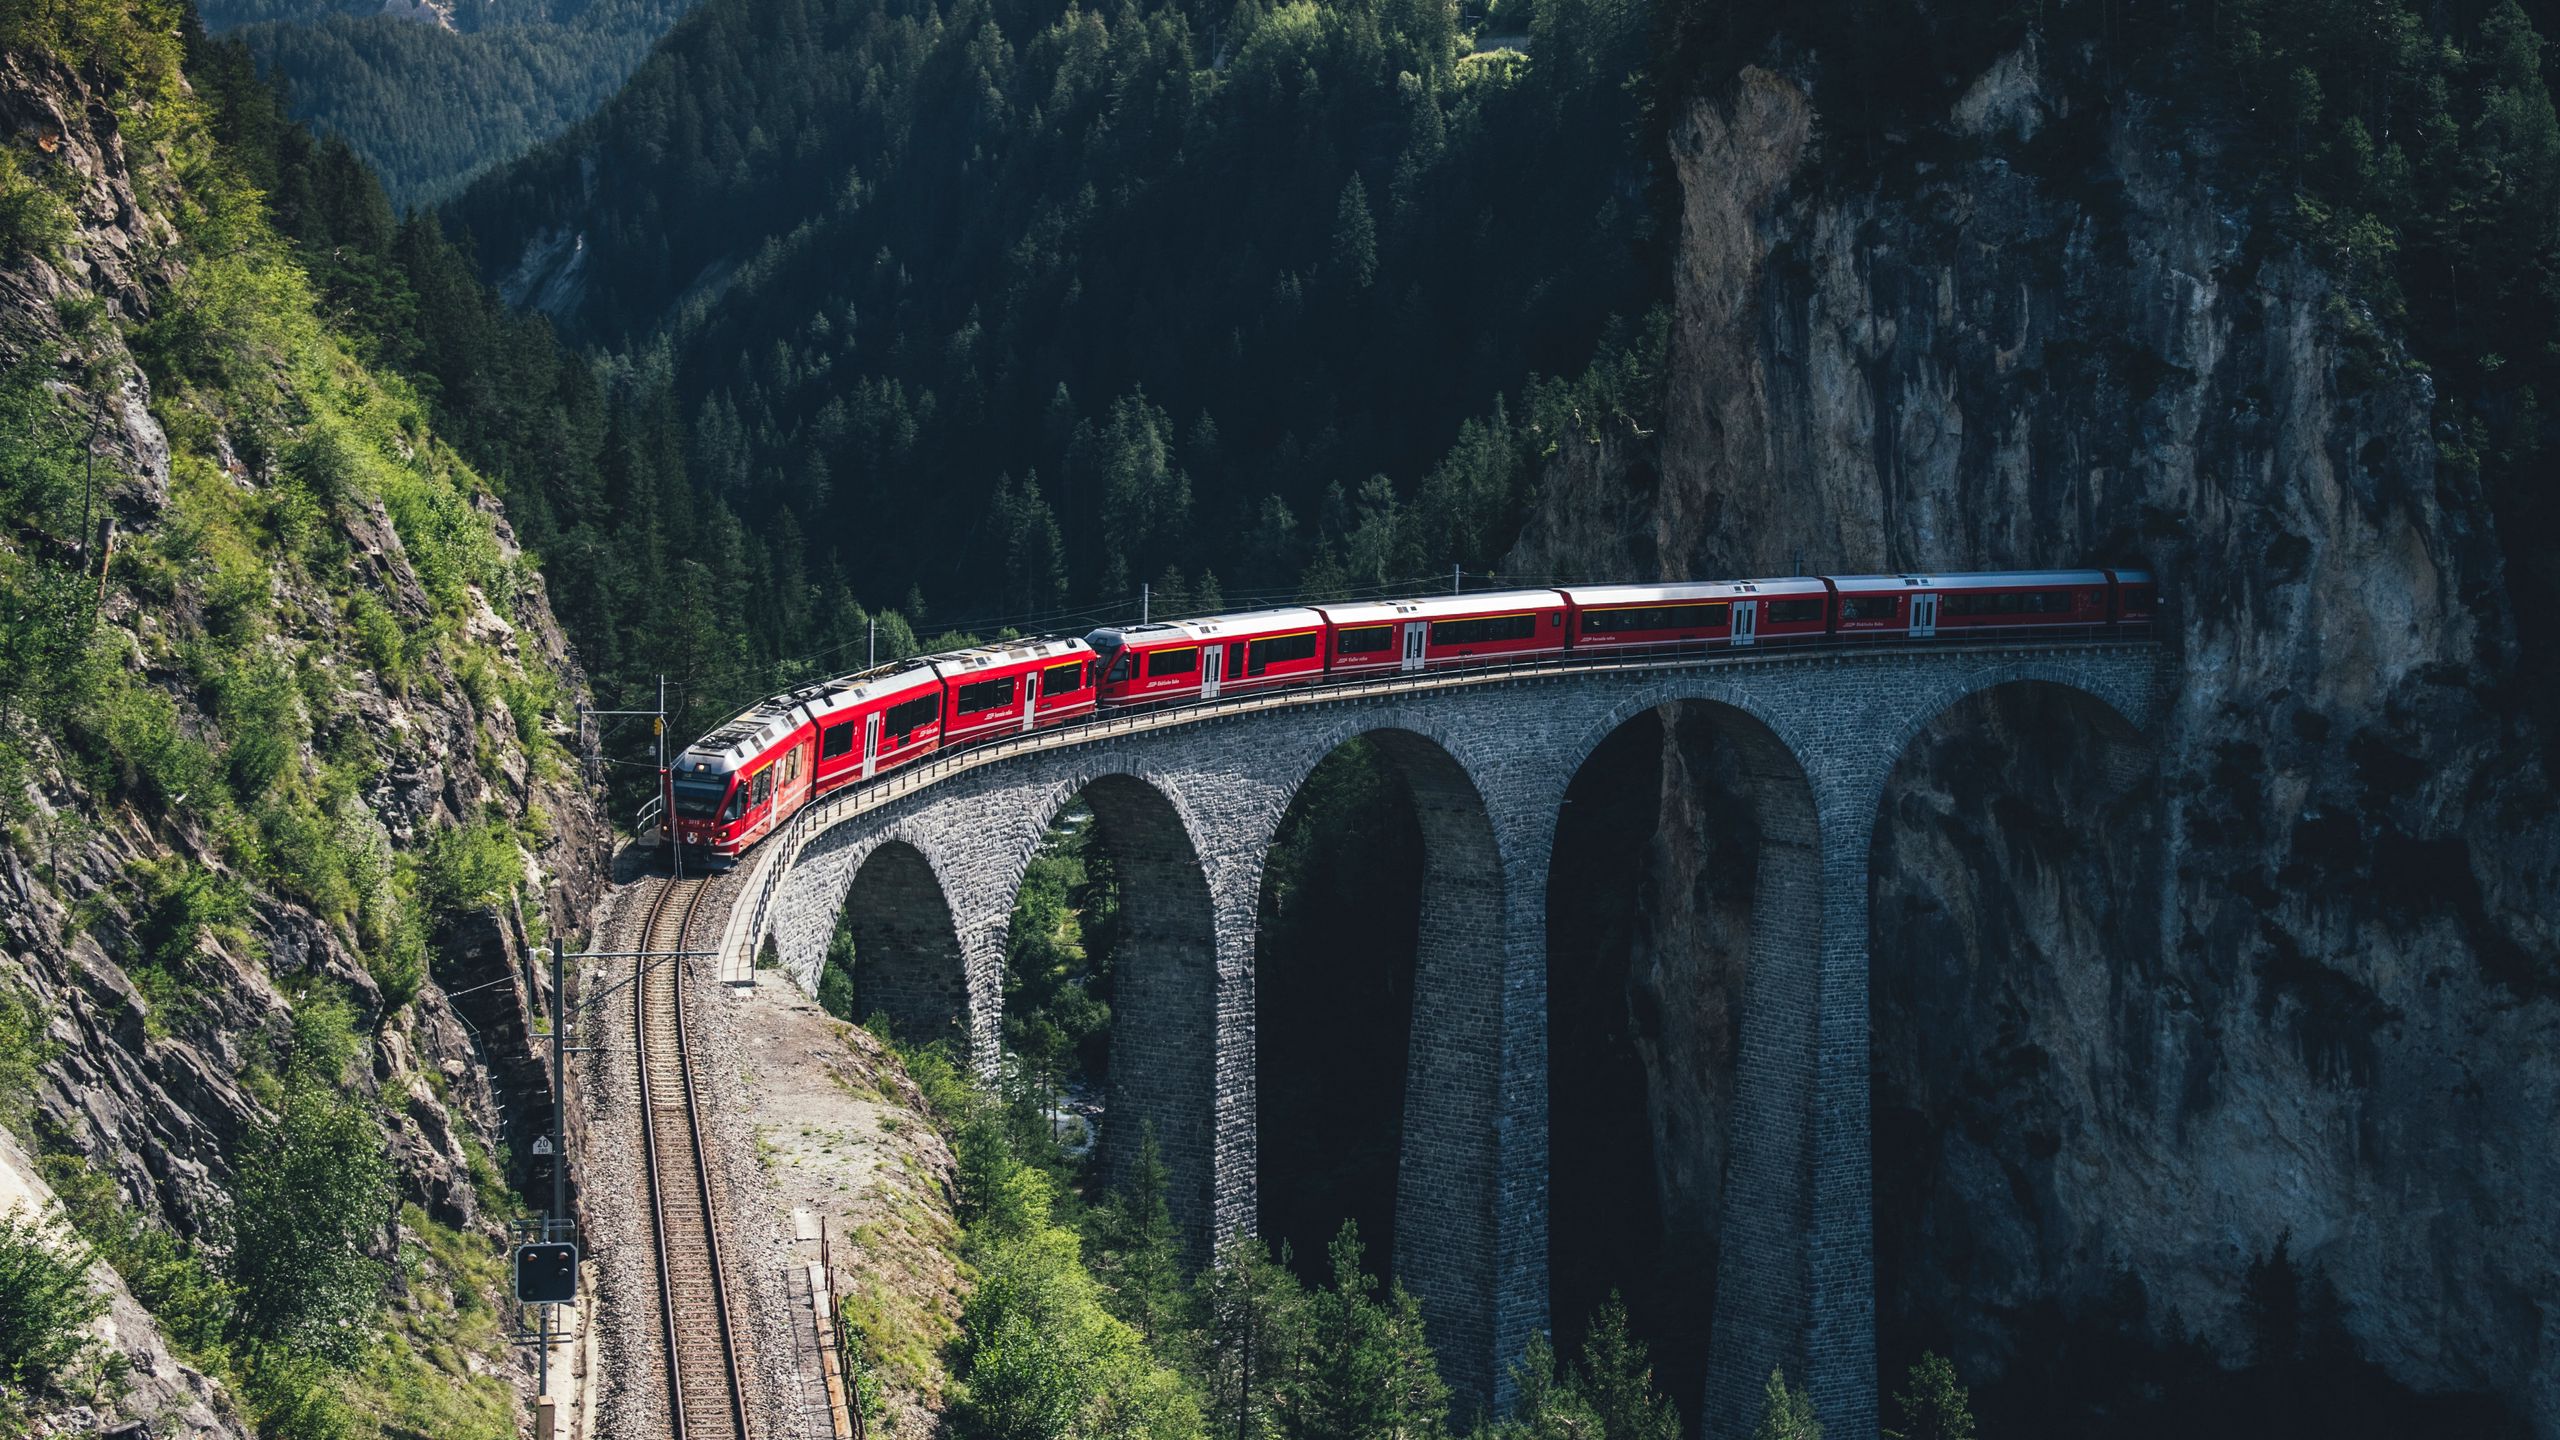 Download wallpaper 2560x1440 train, mountains, aerial view, bridge, railway  widescreen 16:9 hd background